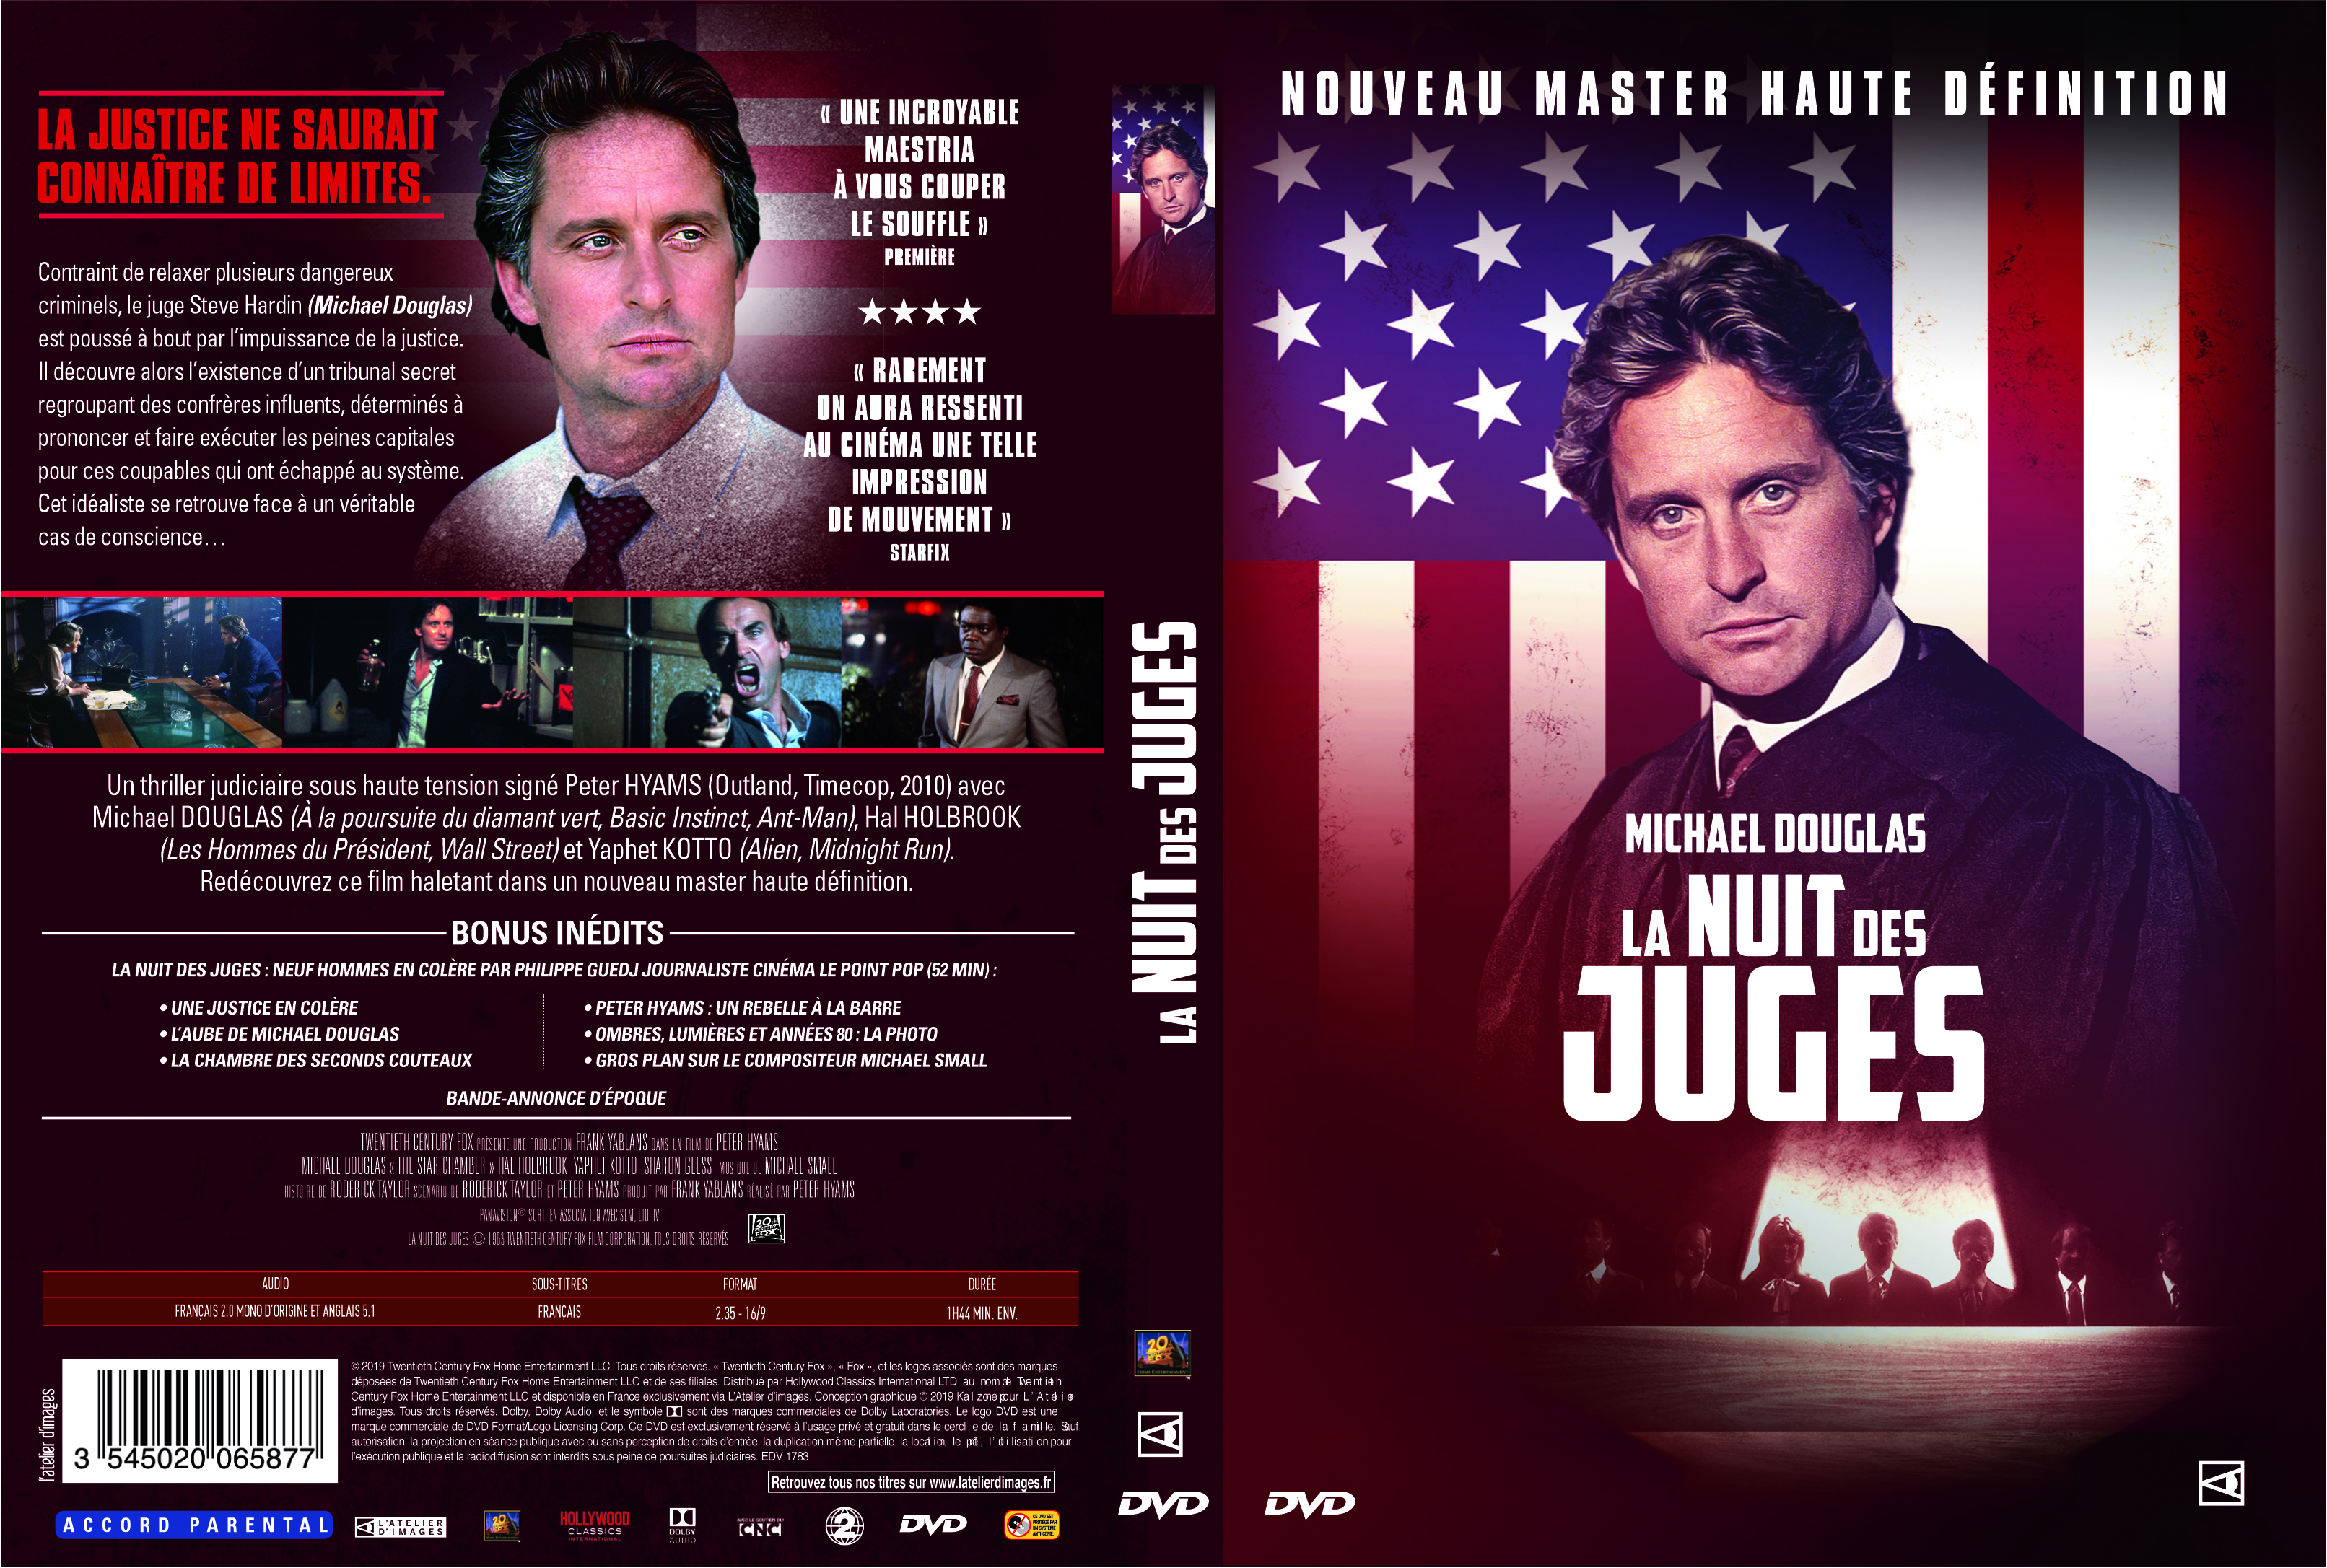 Jaquette DVD La Nuit des juges v3